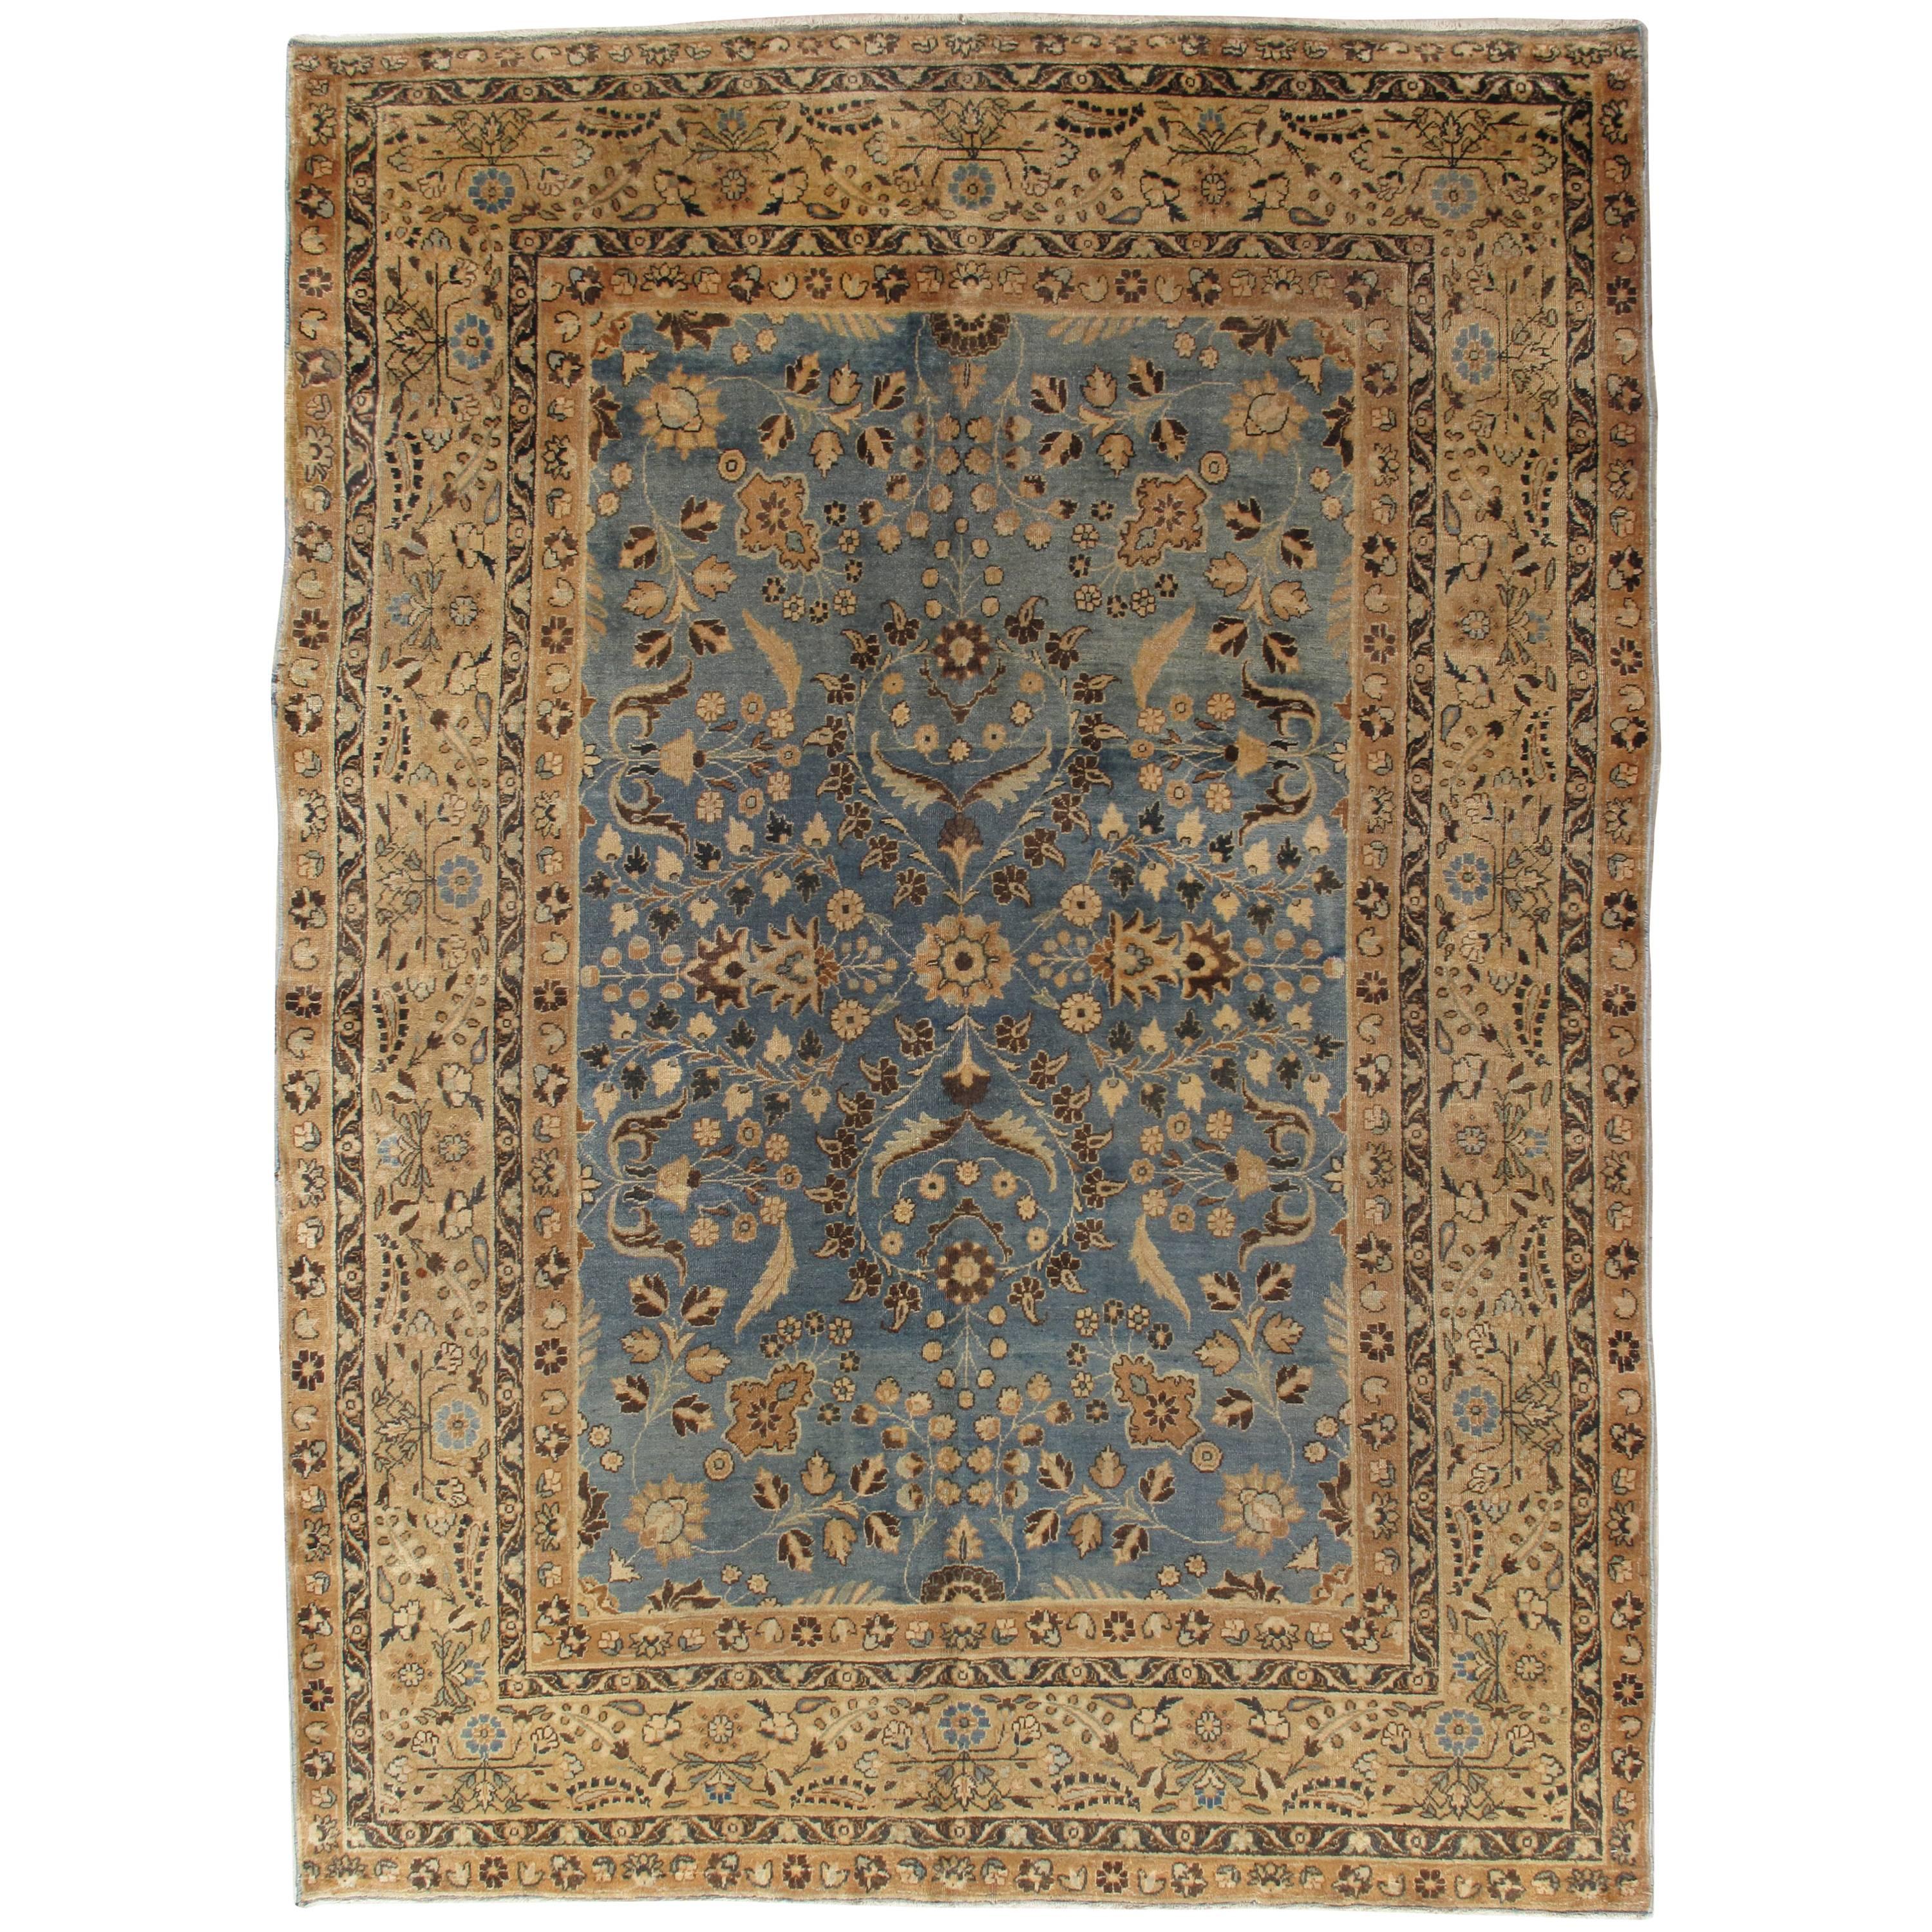 Antique Khorassan Carpet, 20th Century Persian Handwoven Rug, Light Blue, Beige For Sale